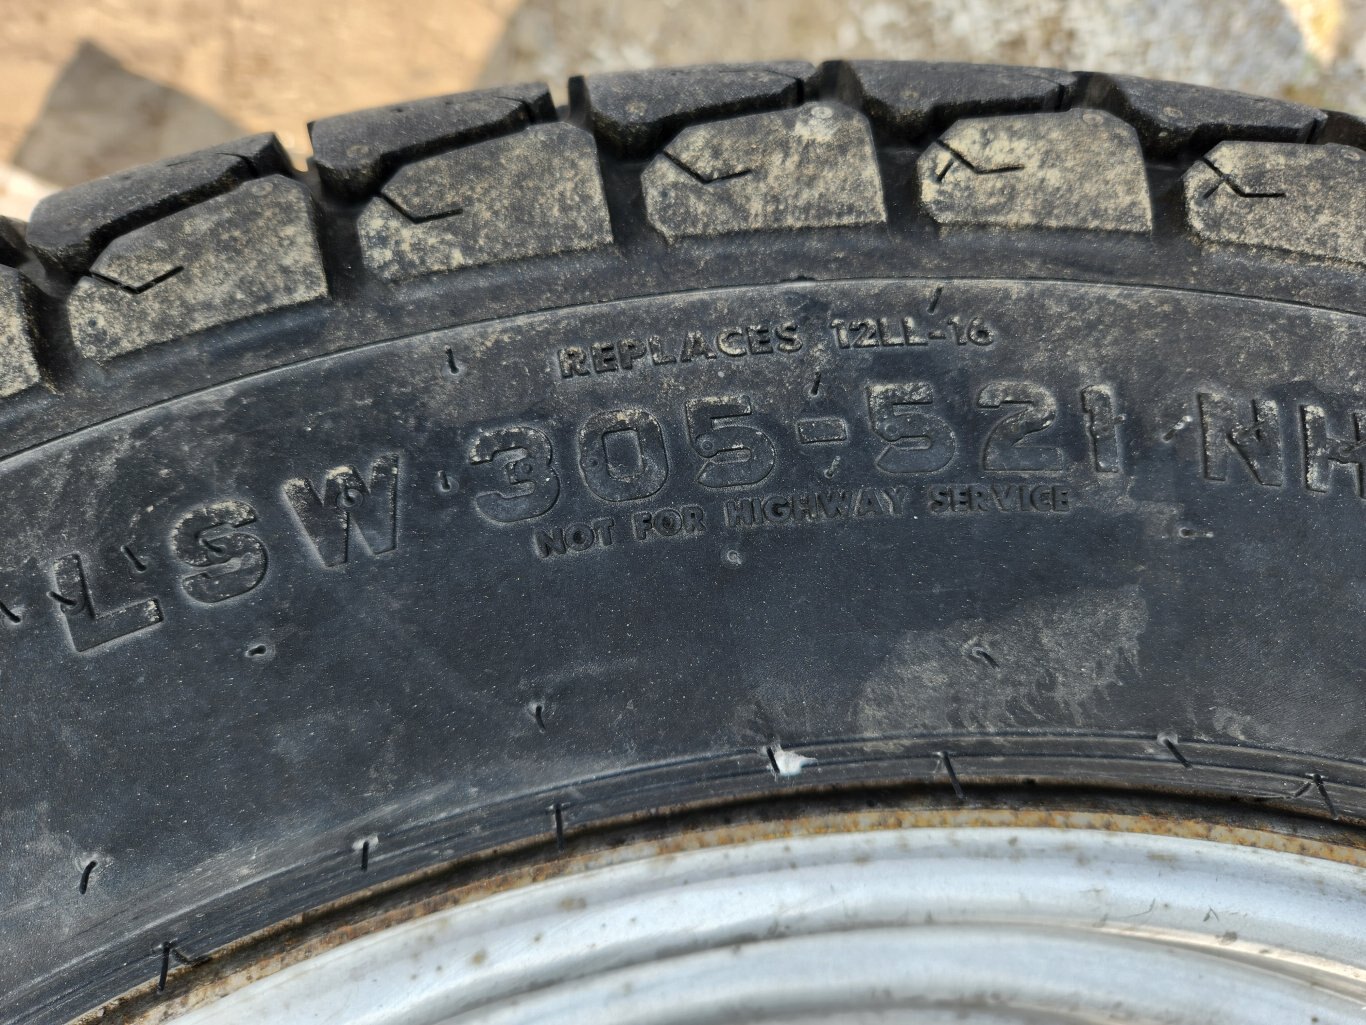 Titan LSW305 521 R3 turf tires on rims